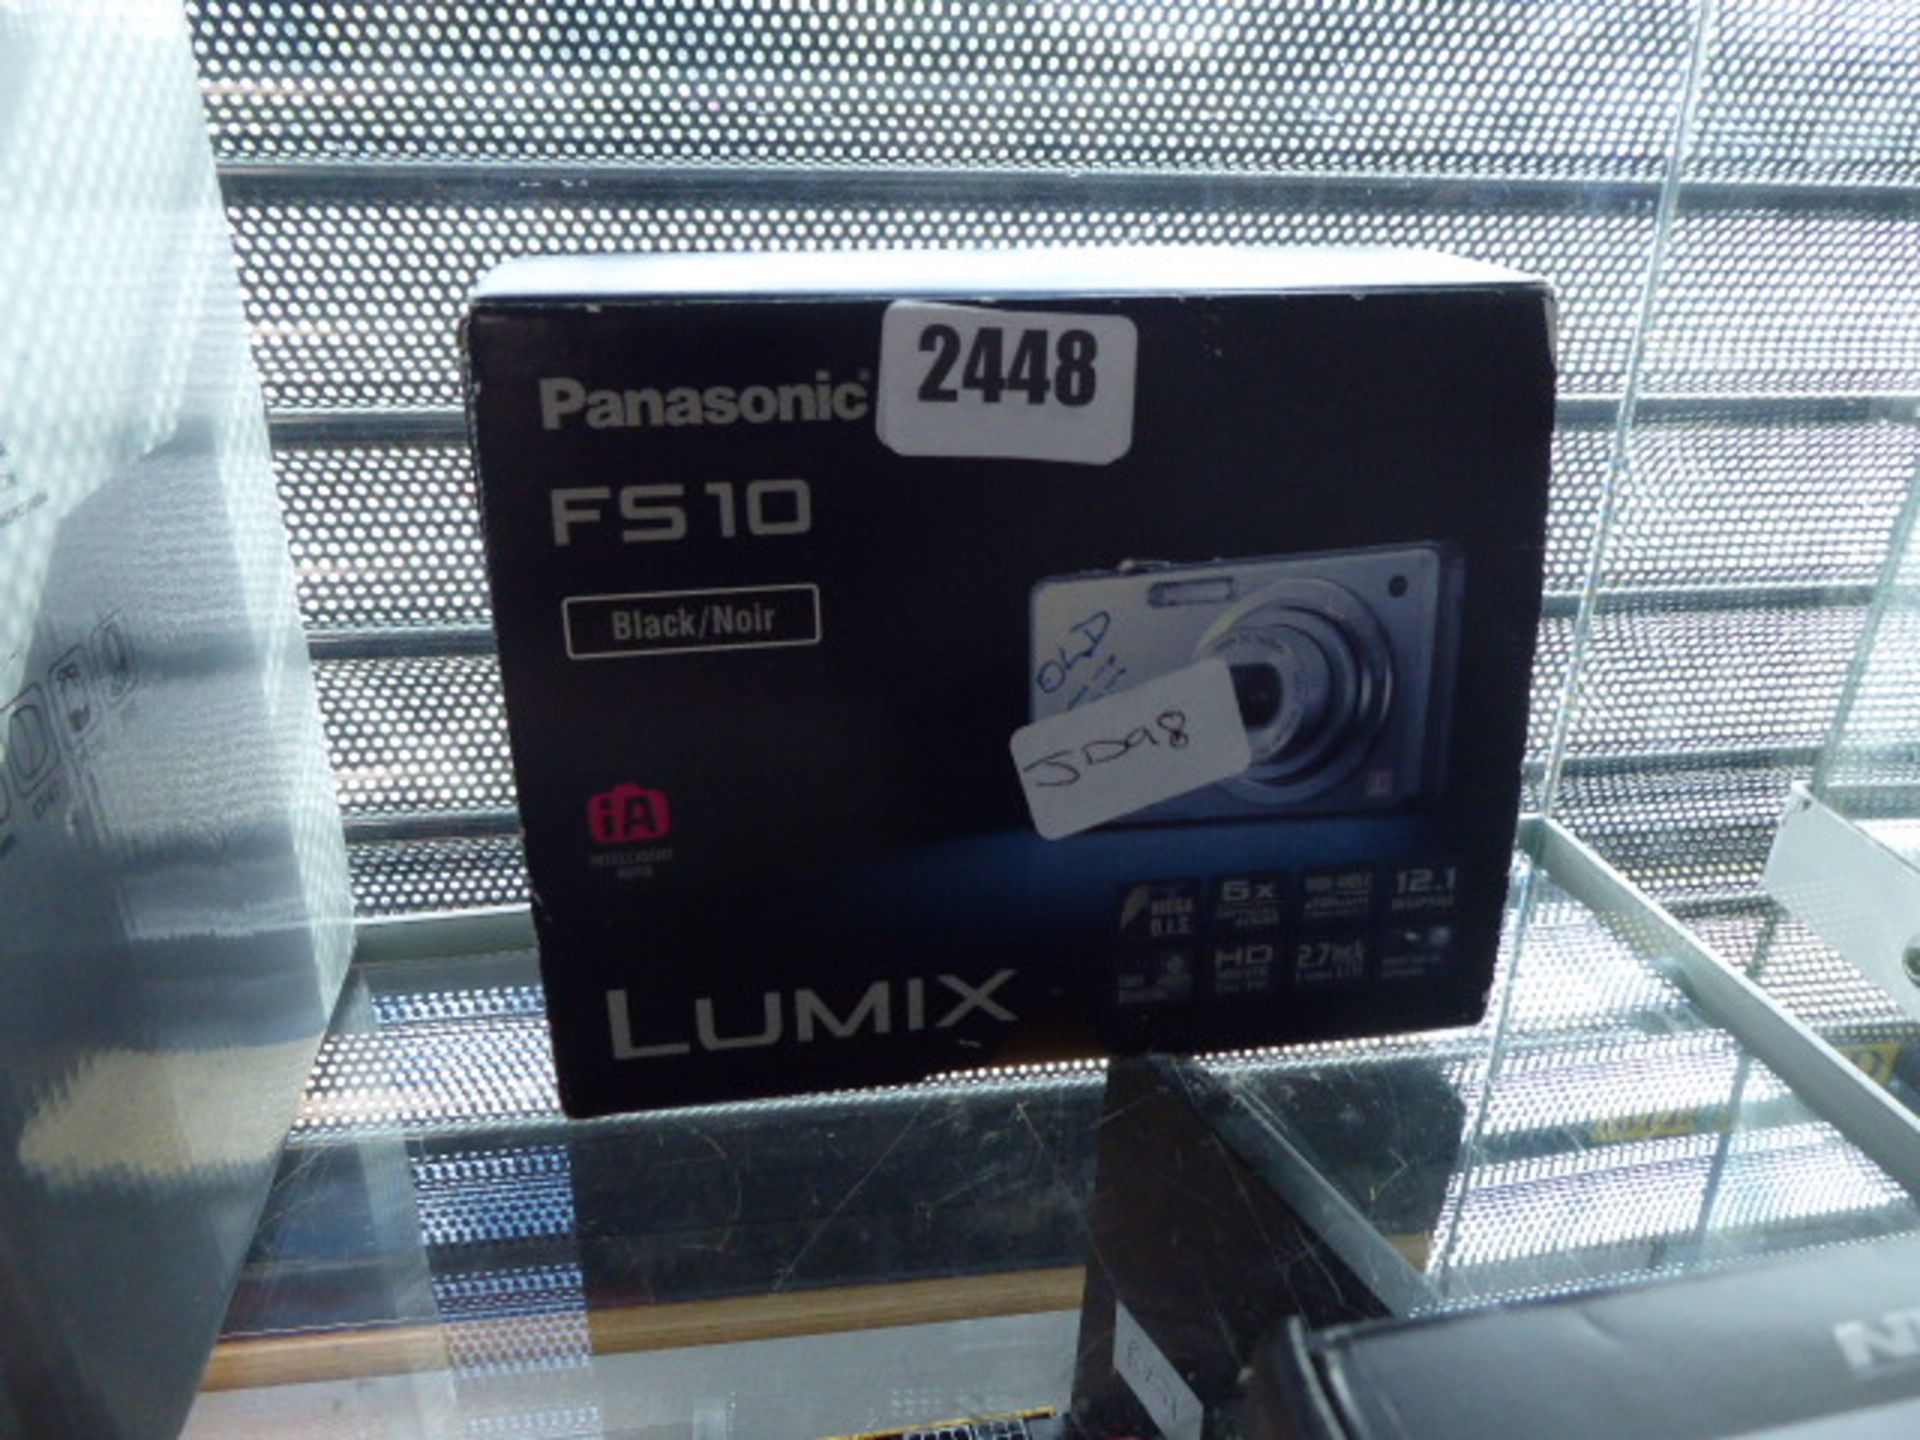 2502. Panasonic Lumix FS10 camera in box